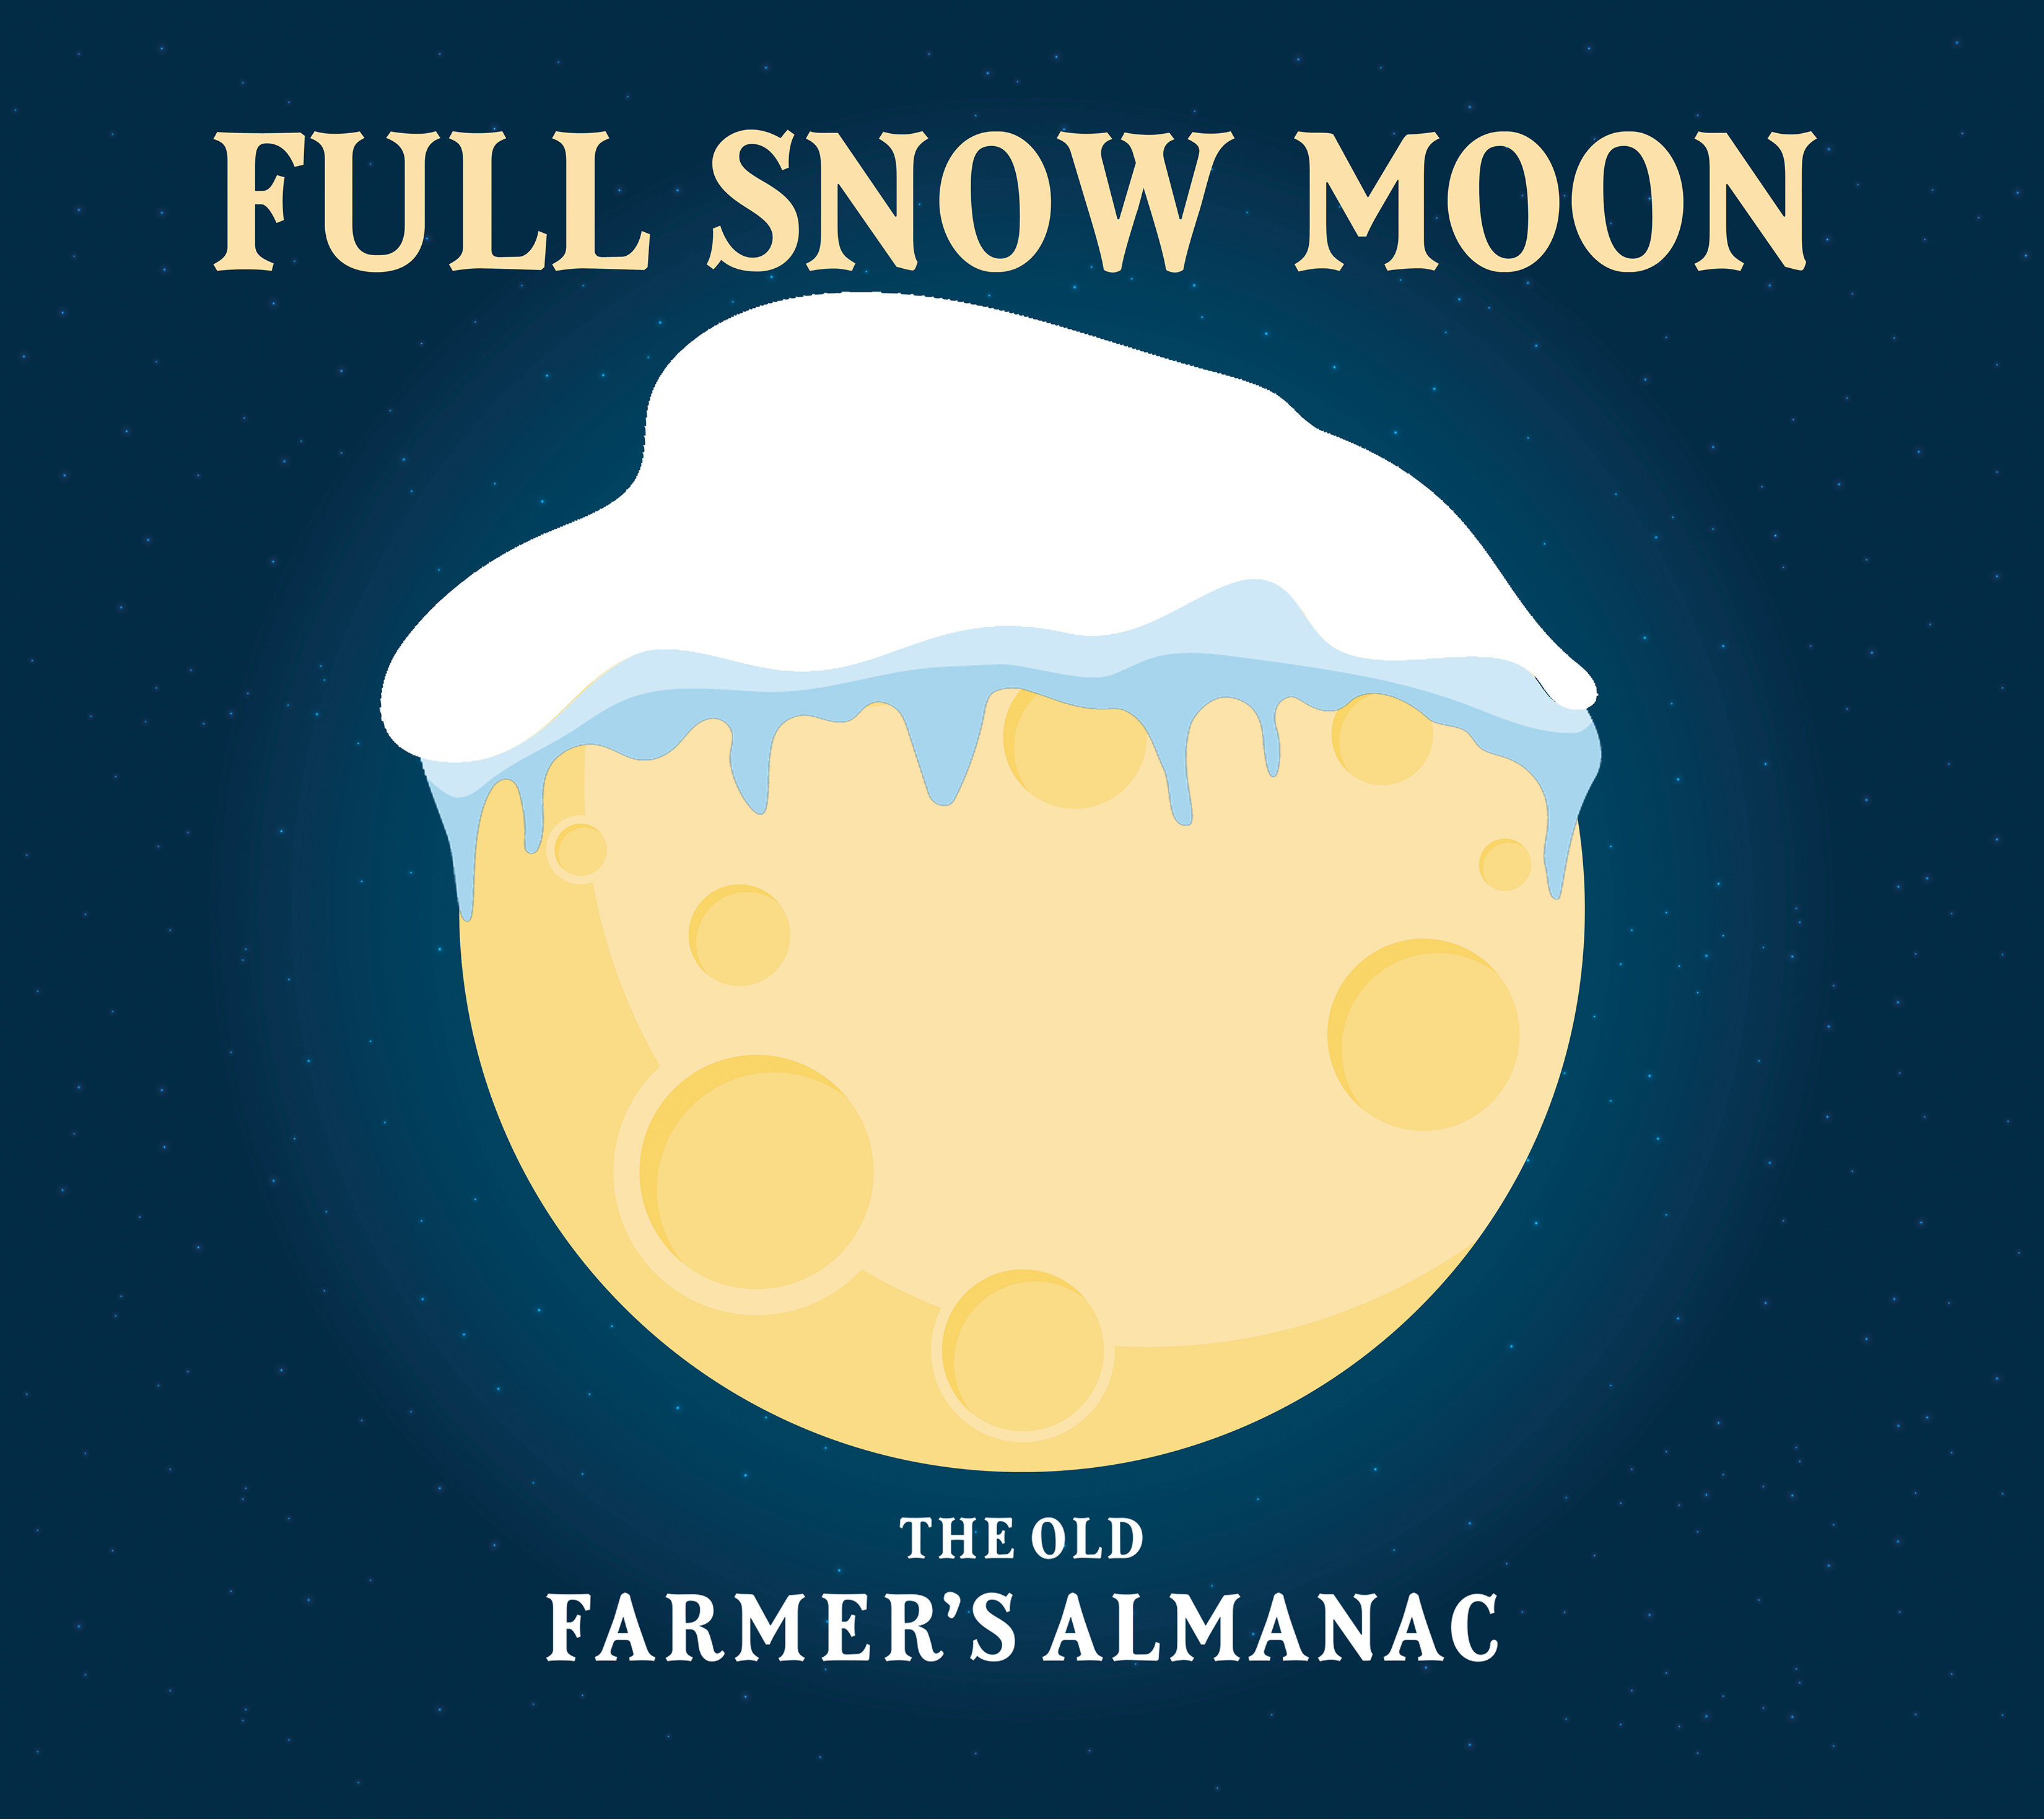 Full Moon in February 2020: See the Full Snow Moon | The Old Farmer's Almanac